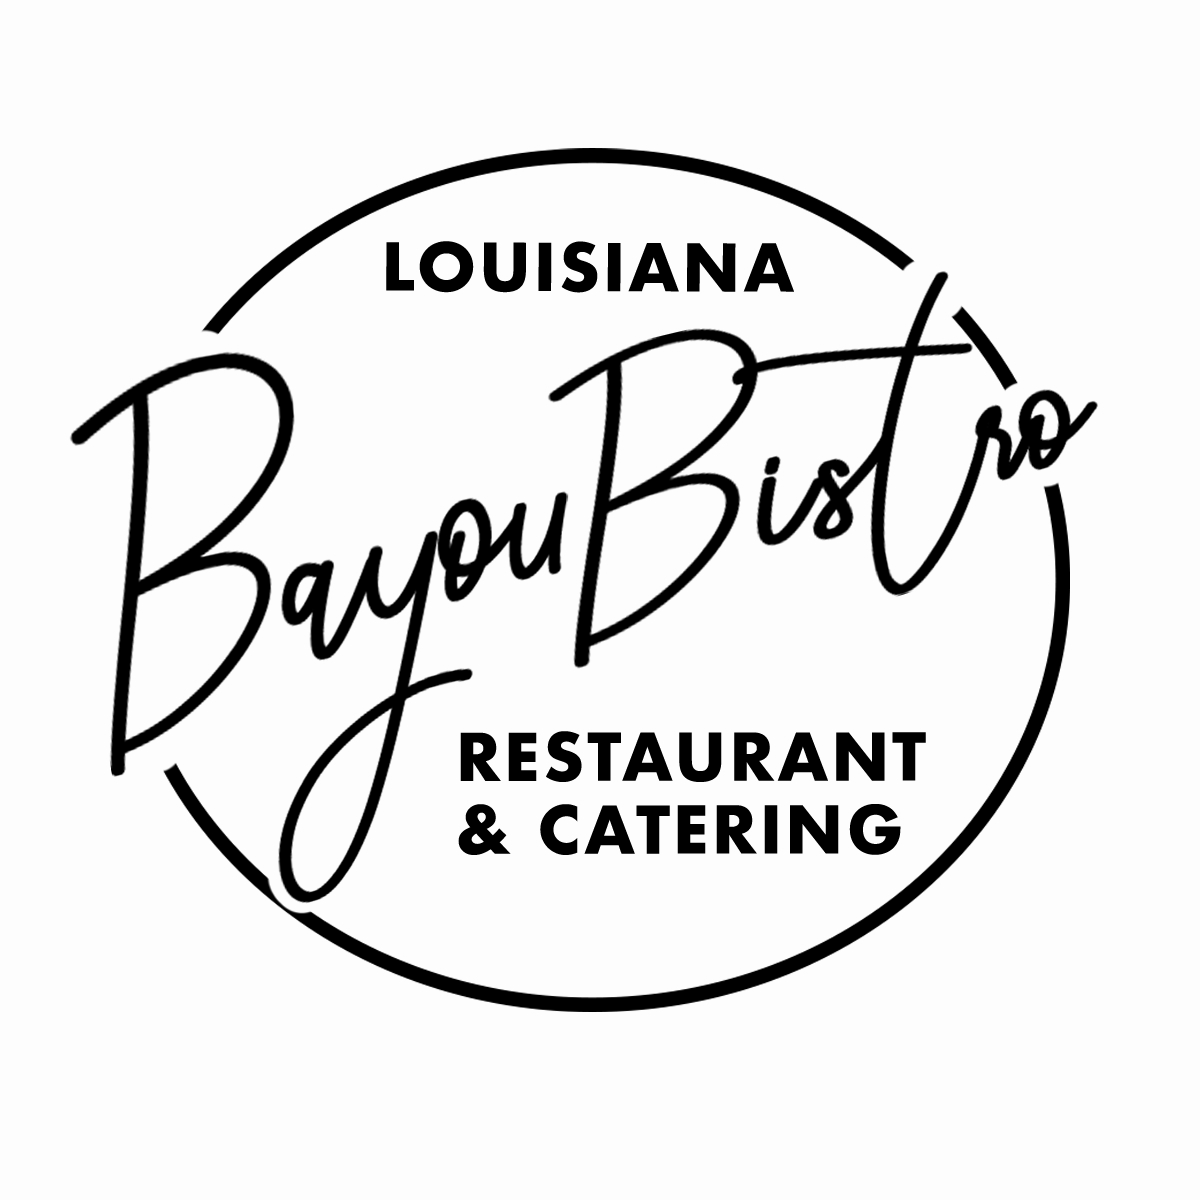 Louisiana Bayou Bistro Catering